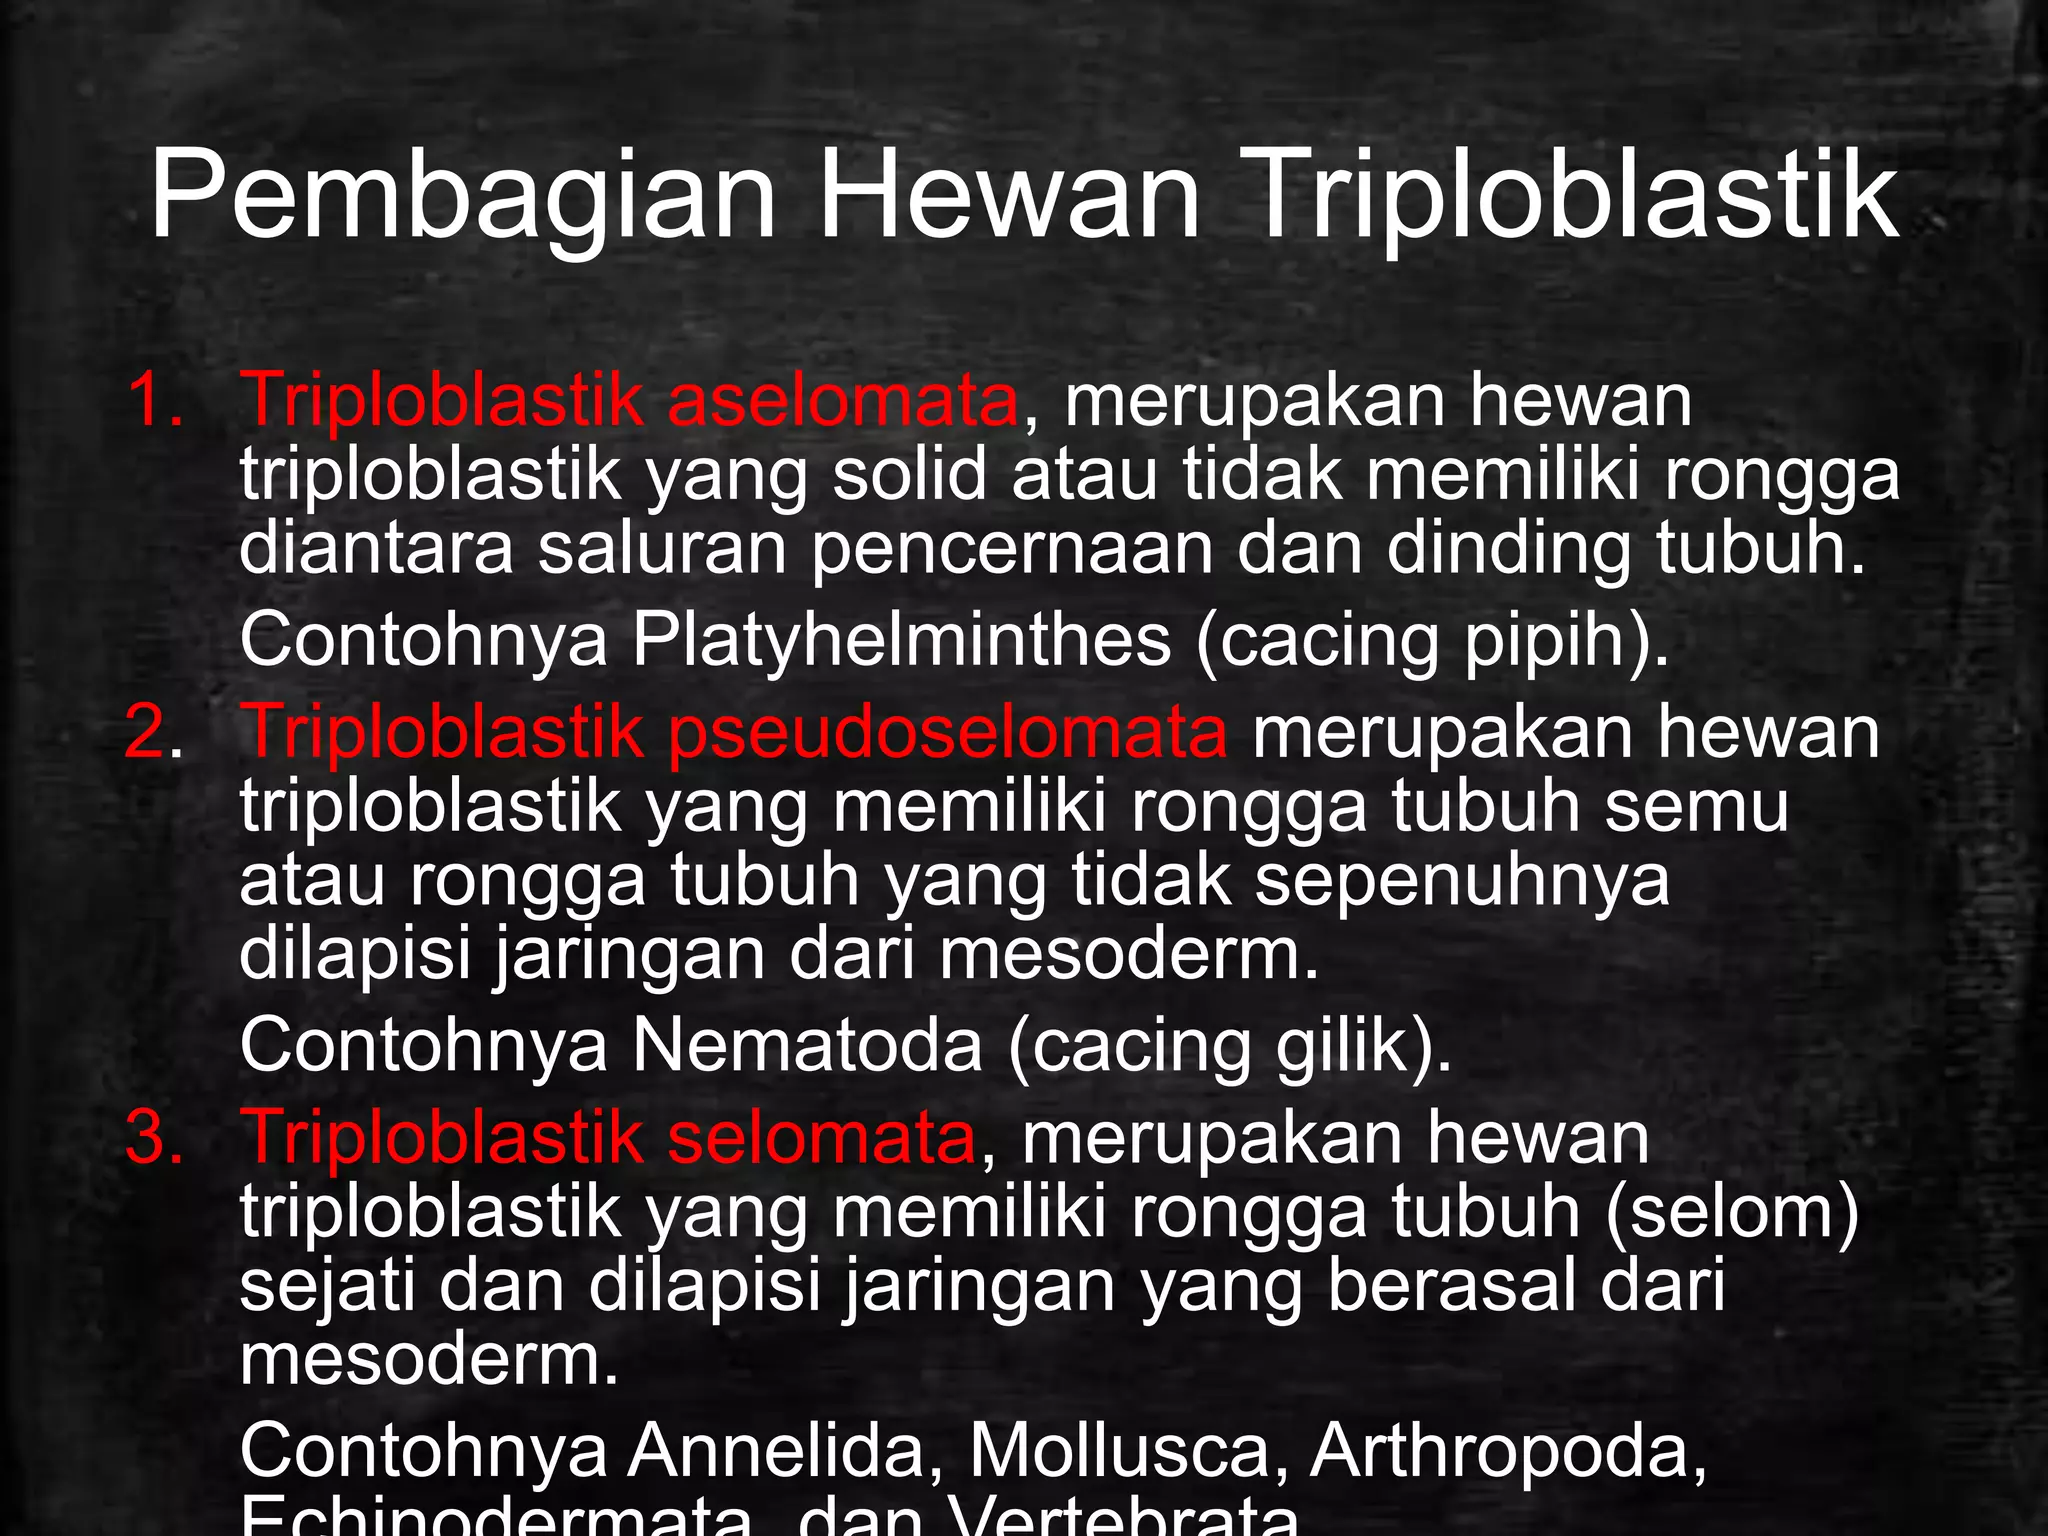 Hewan yang merupakan hewan triploblastik pseudoselomata adalah